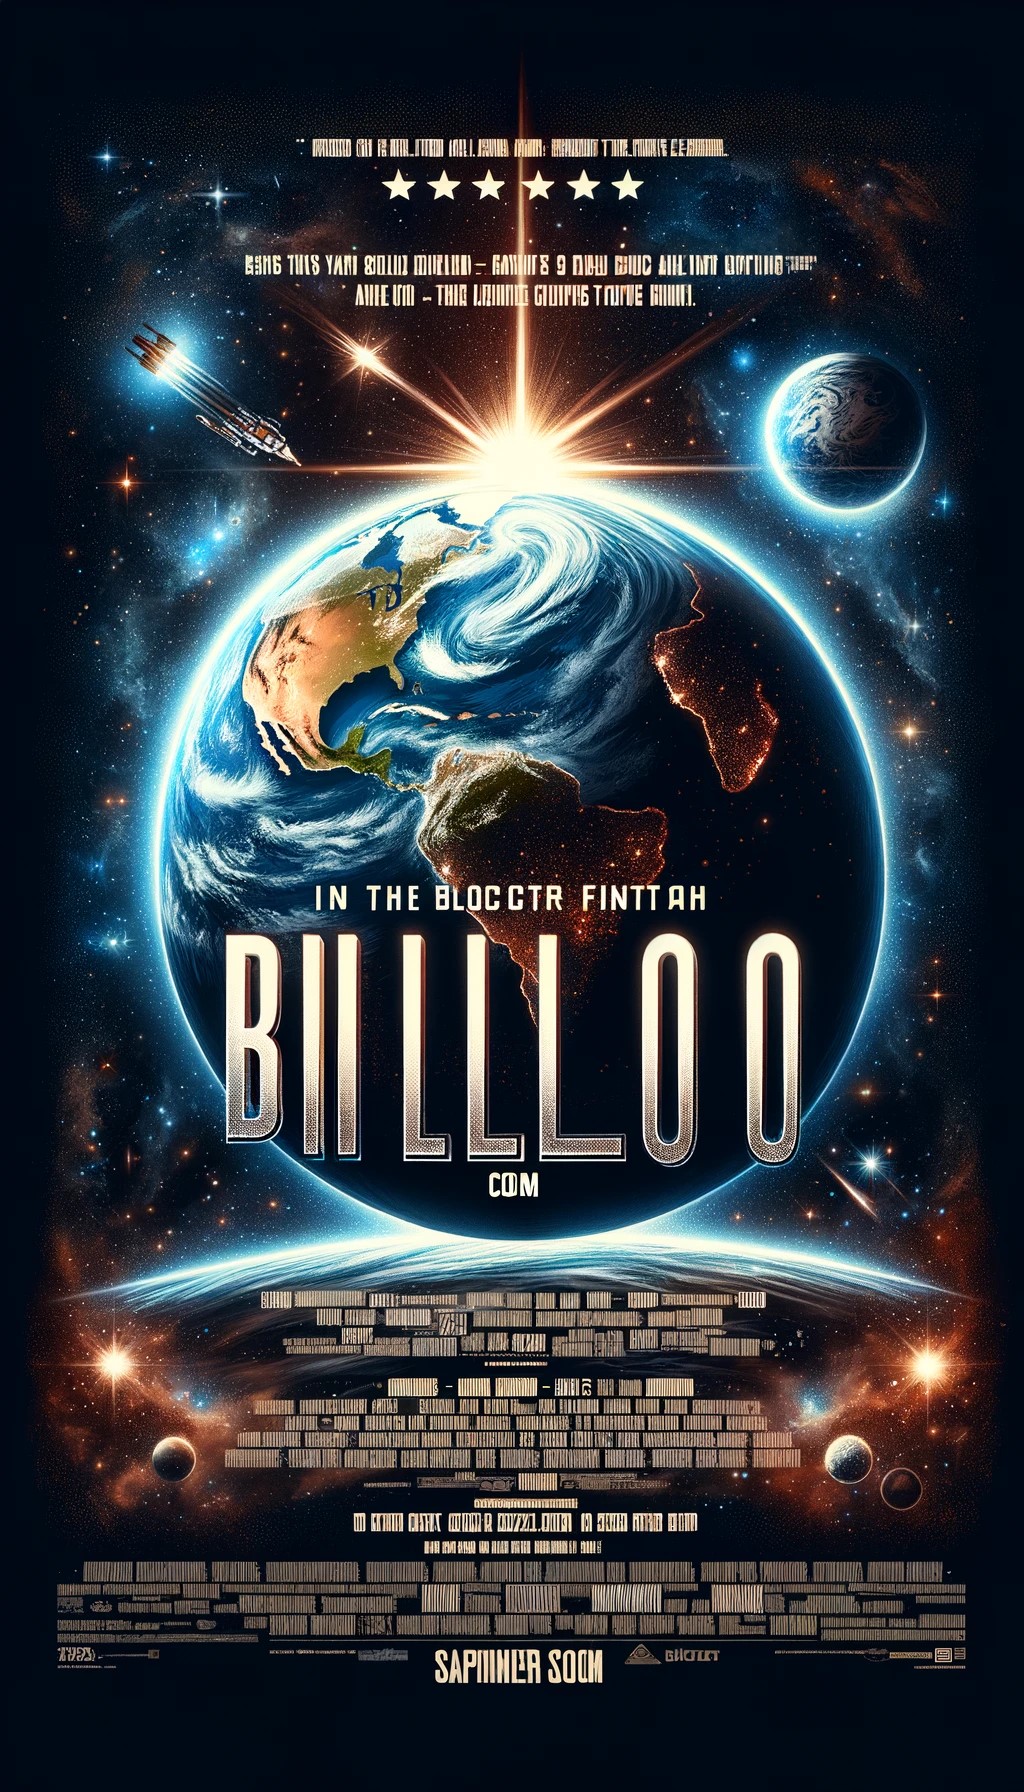 Billoo Poster